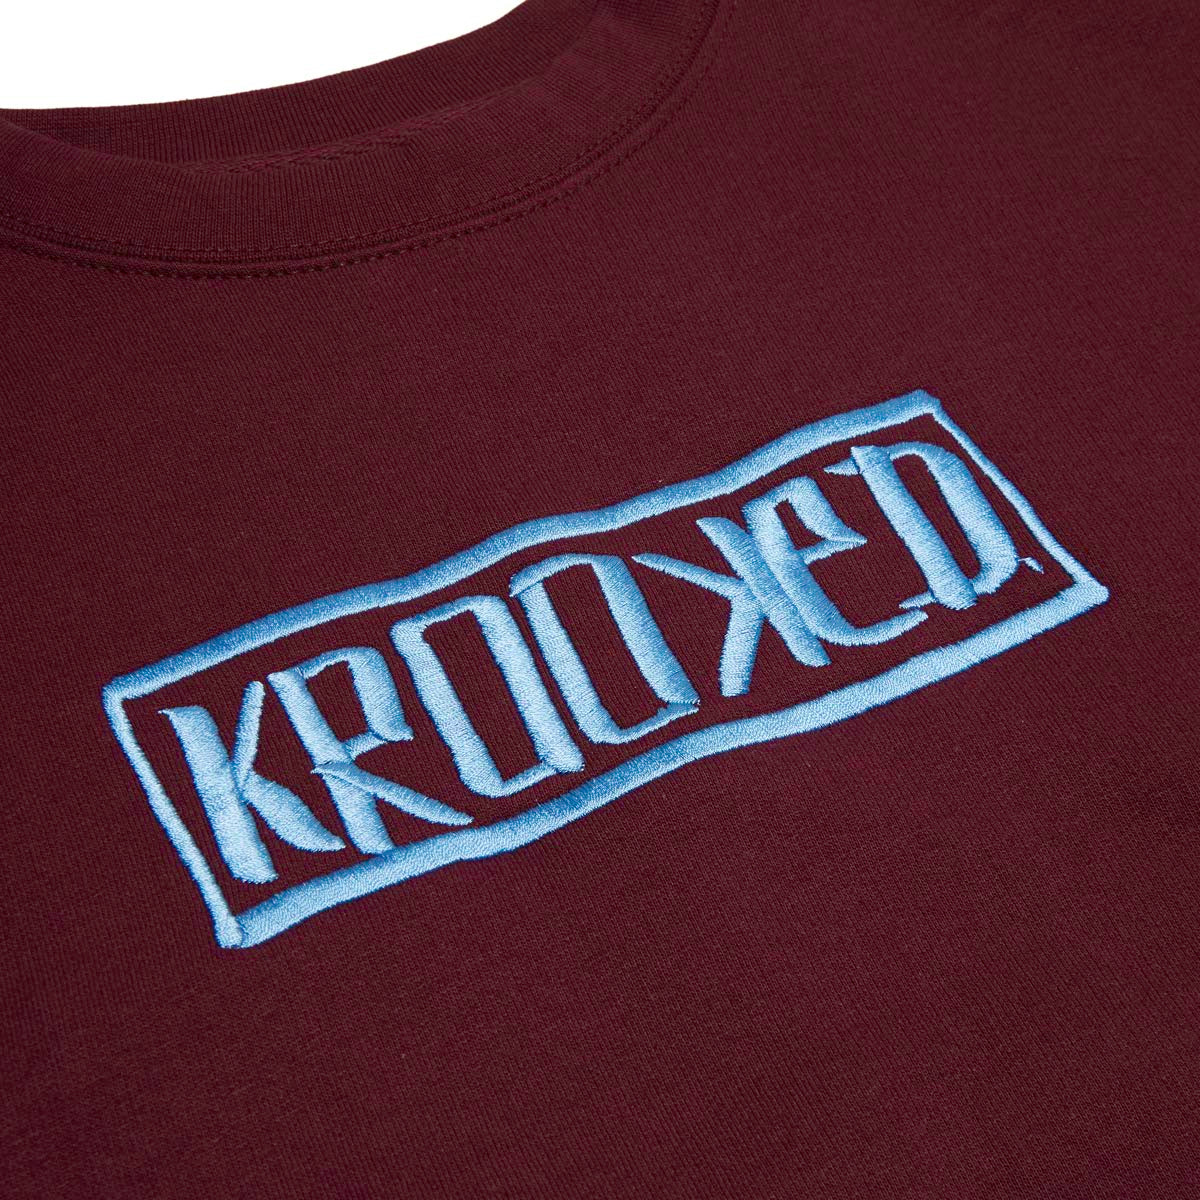 Krooked Box Sweatshirt - Maroon/Blue image 2